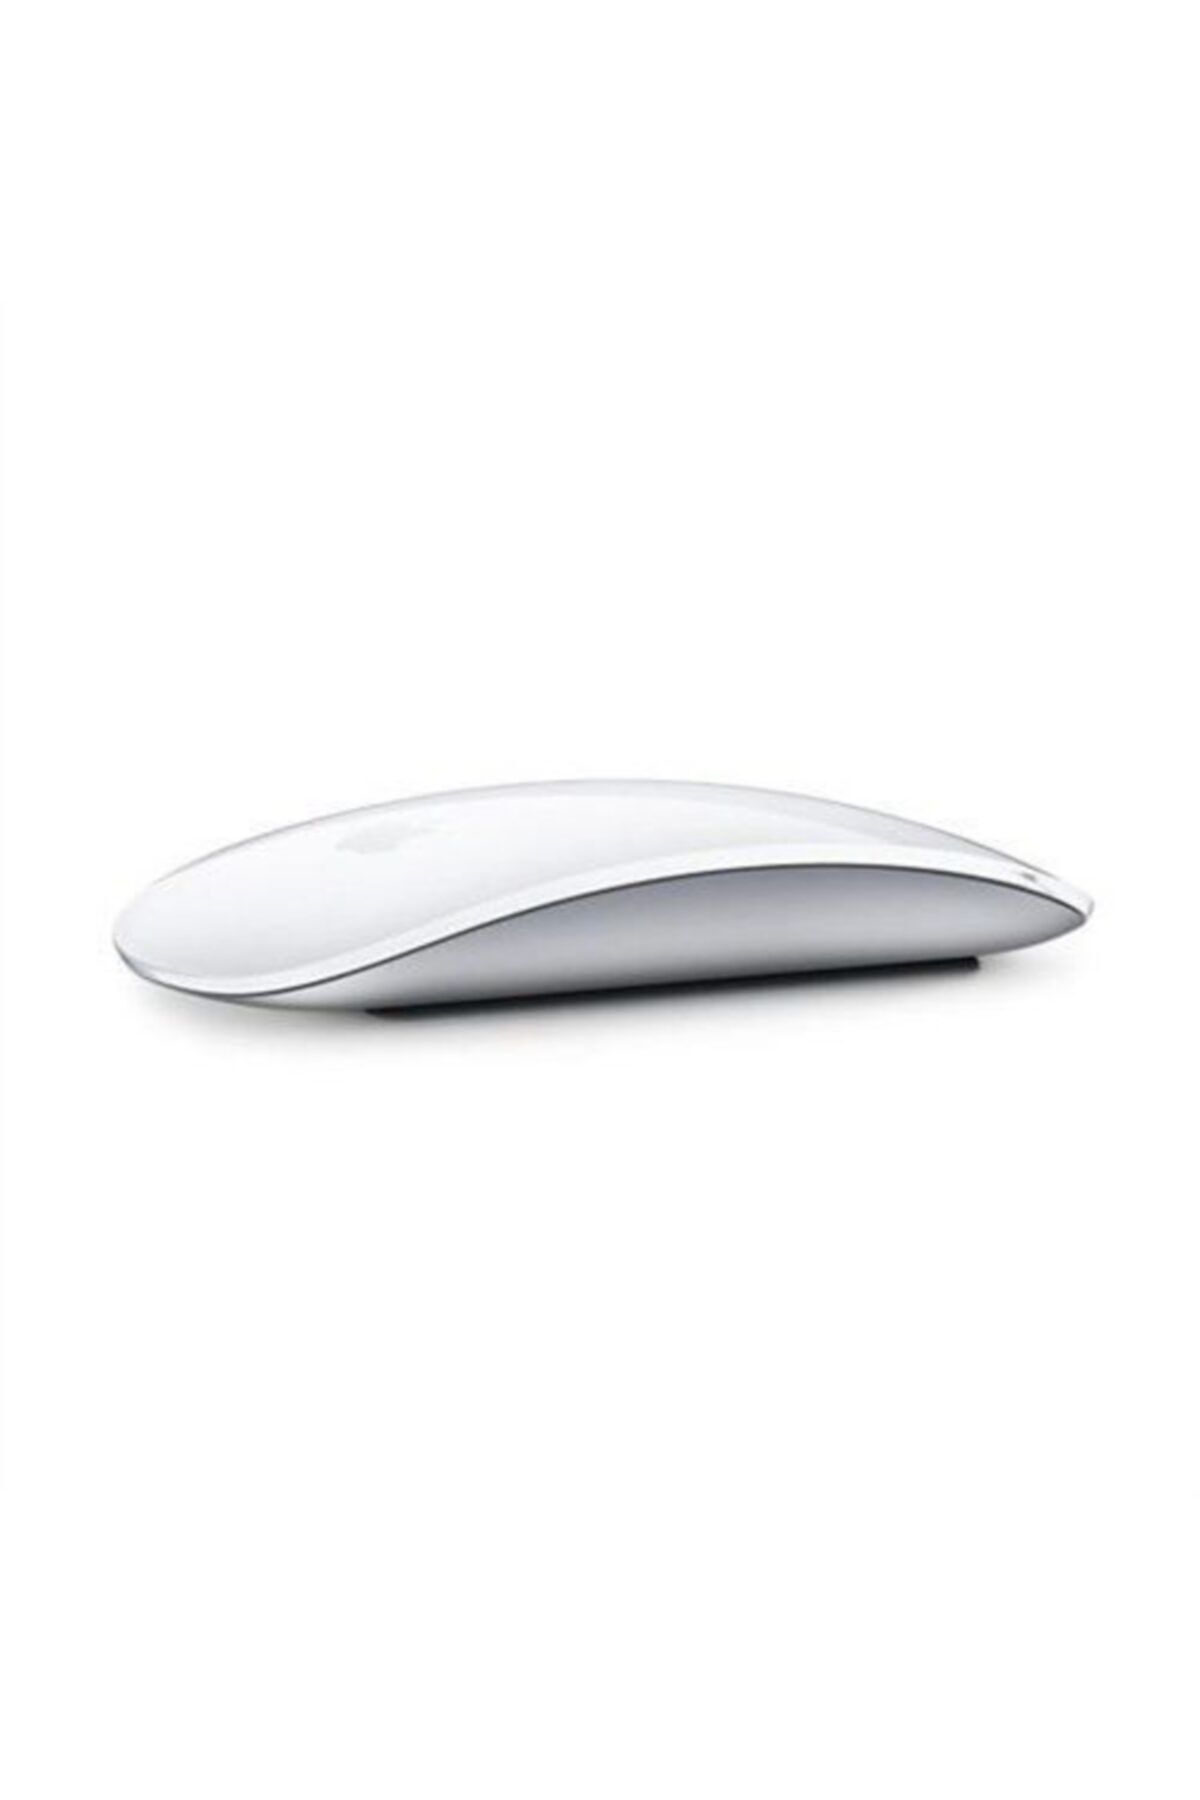 Apple Magic Mouse 2 Beyaz MLA02TU/A Bluetooth Mouse